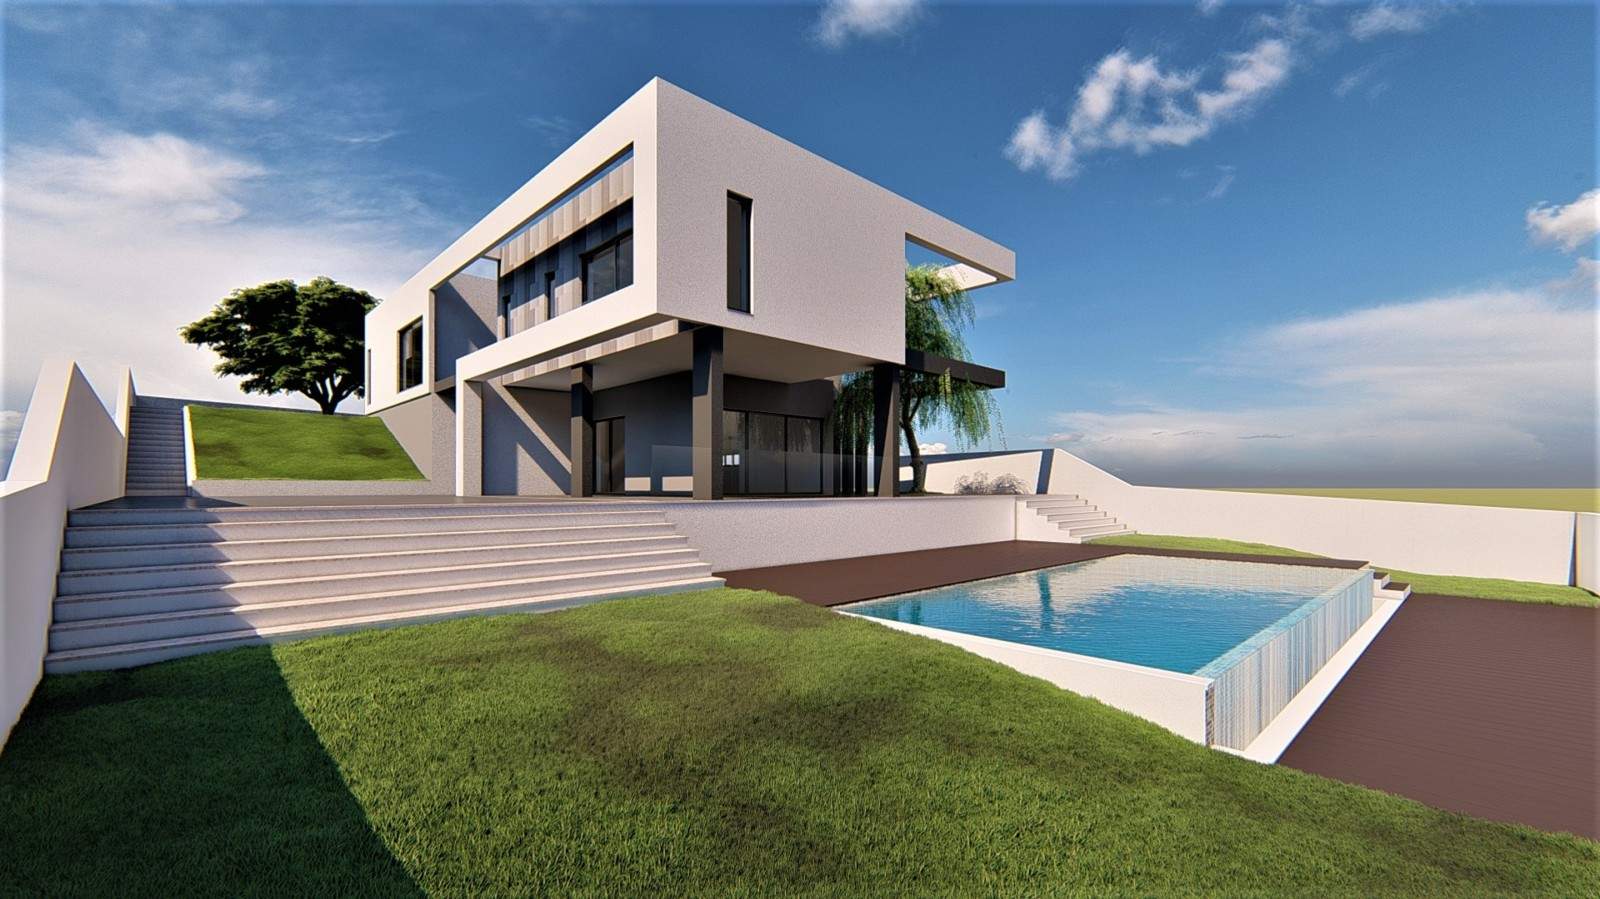 3 bedroom villa under construction for sale, in Vilamoura, Algarve_213451